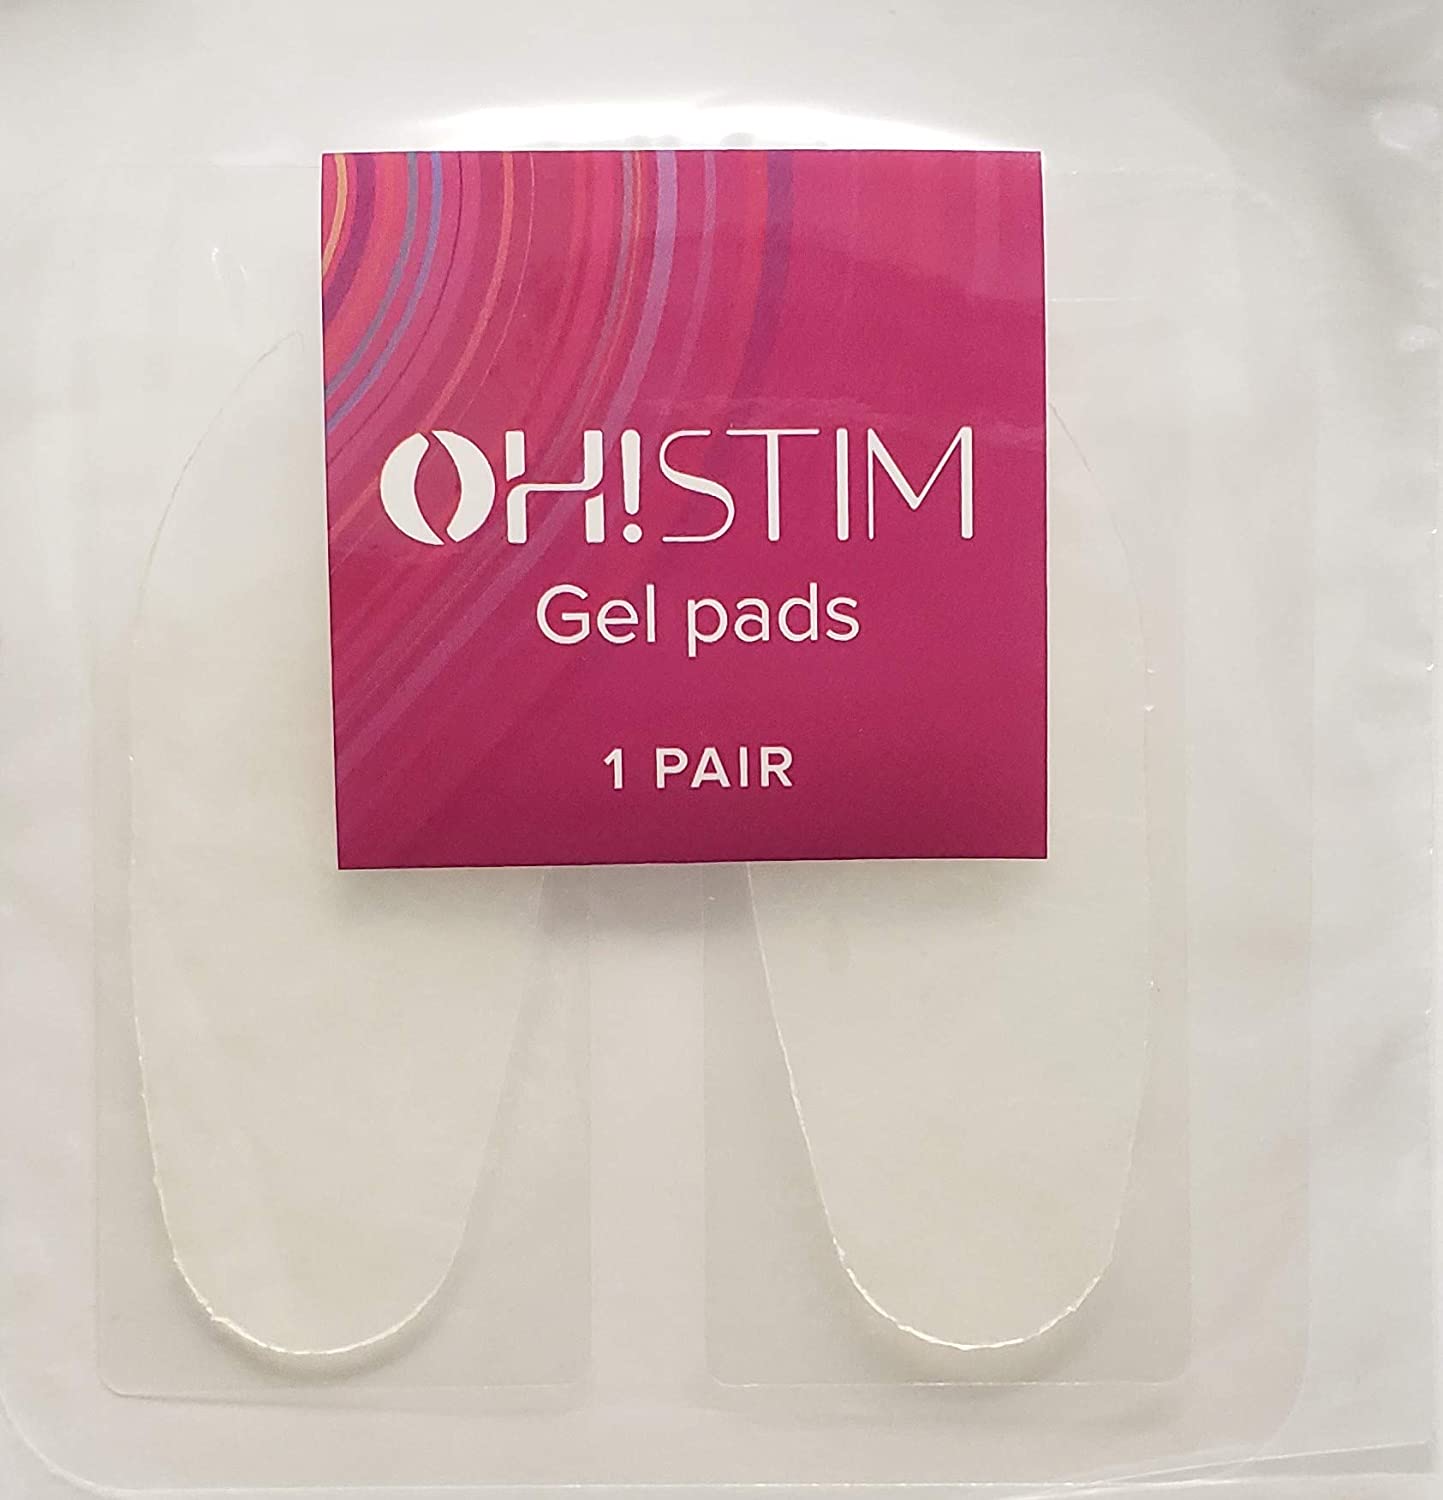 OH!STIM Gel pads (1 pair per pack)